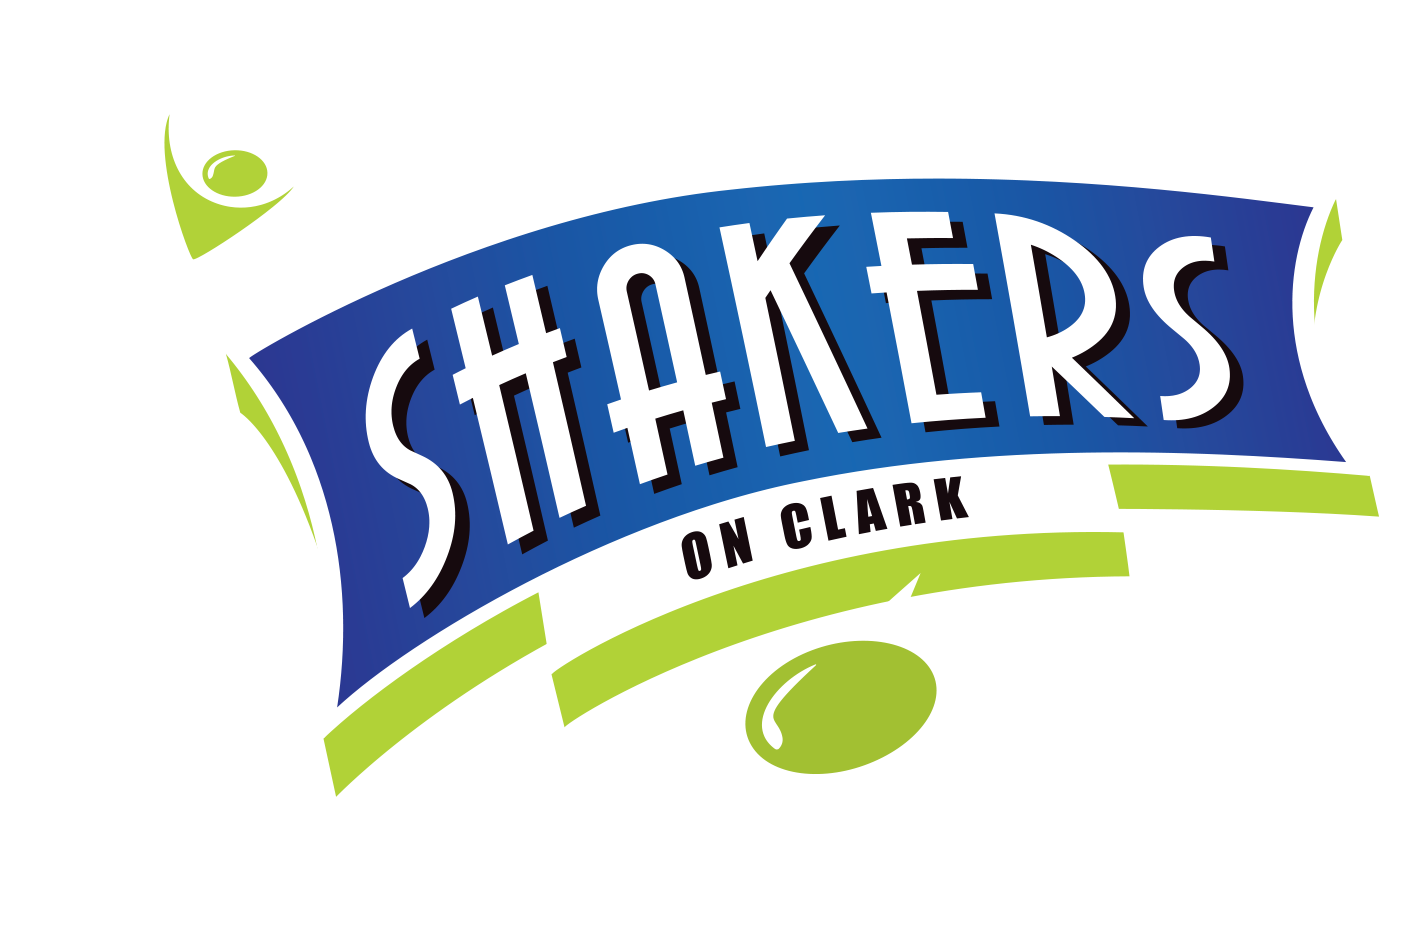 Shakers on Clark